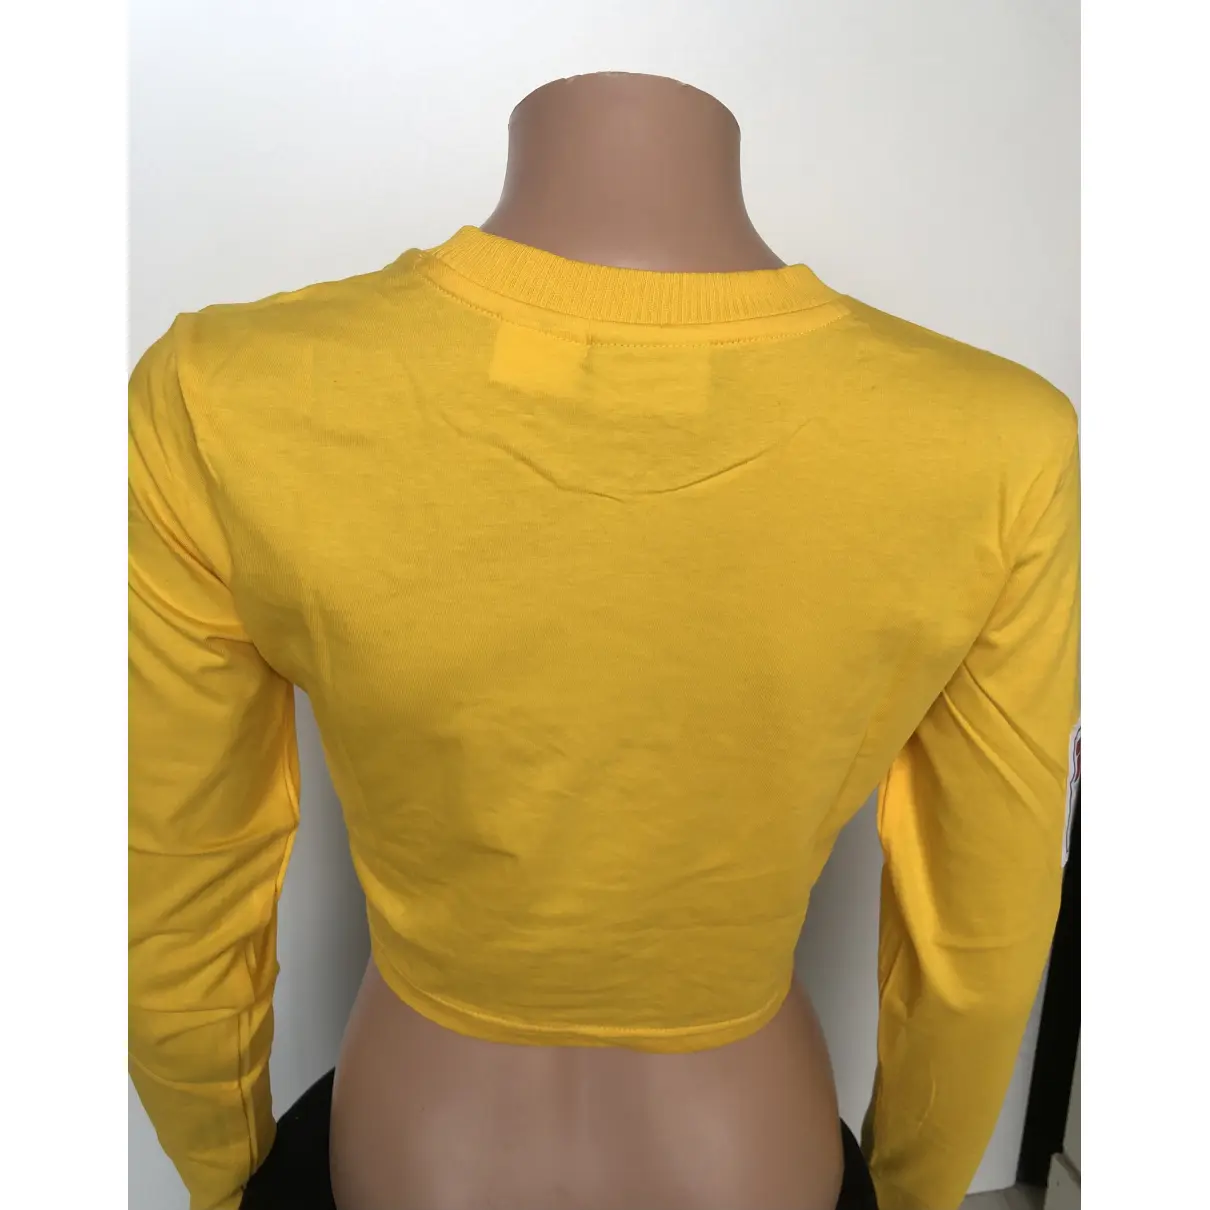 Buy Fila Yellow Cotton Top online